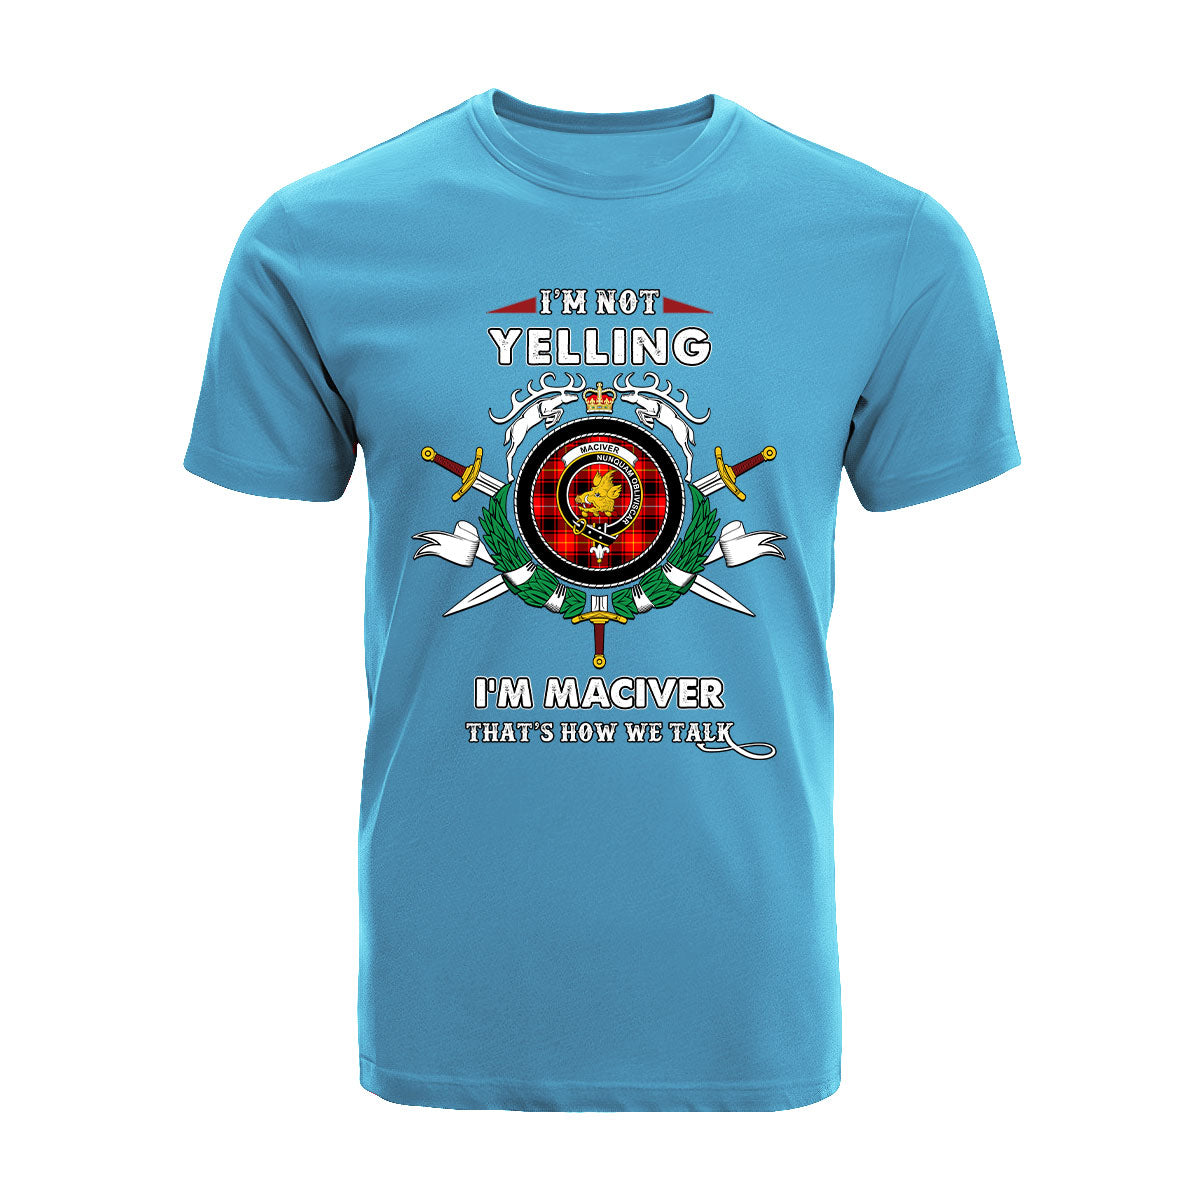 MacIver Tartan Crest T-shirt - I'm not yelling style